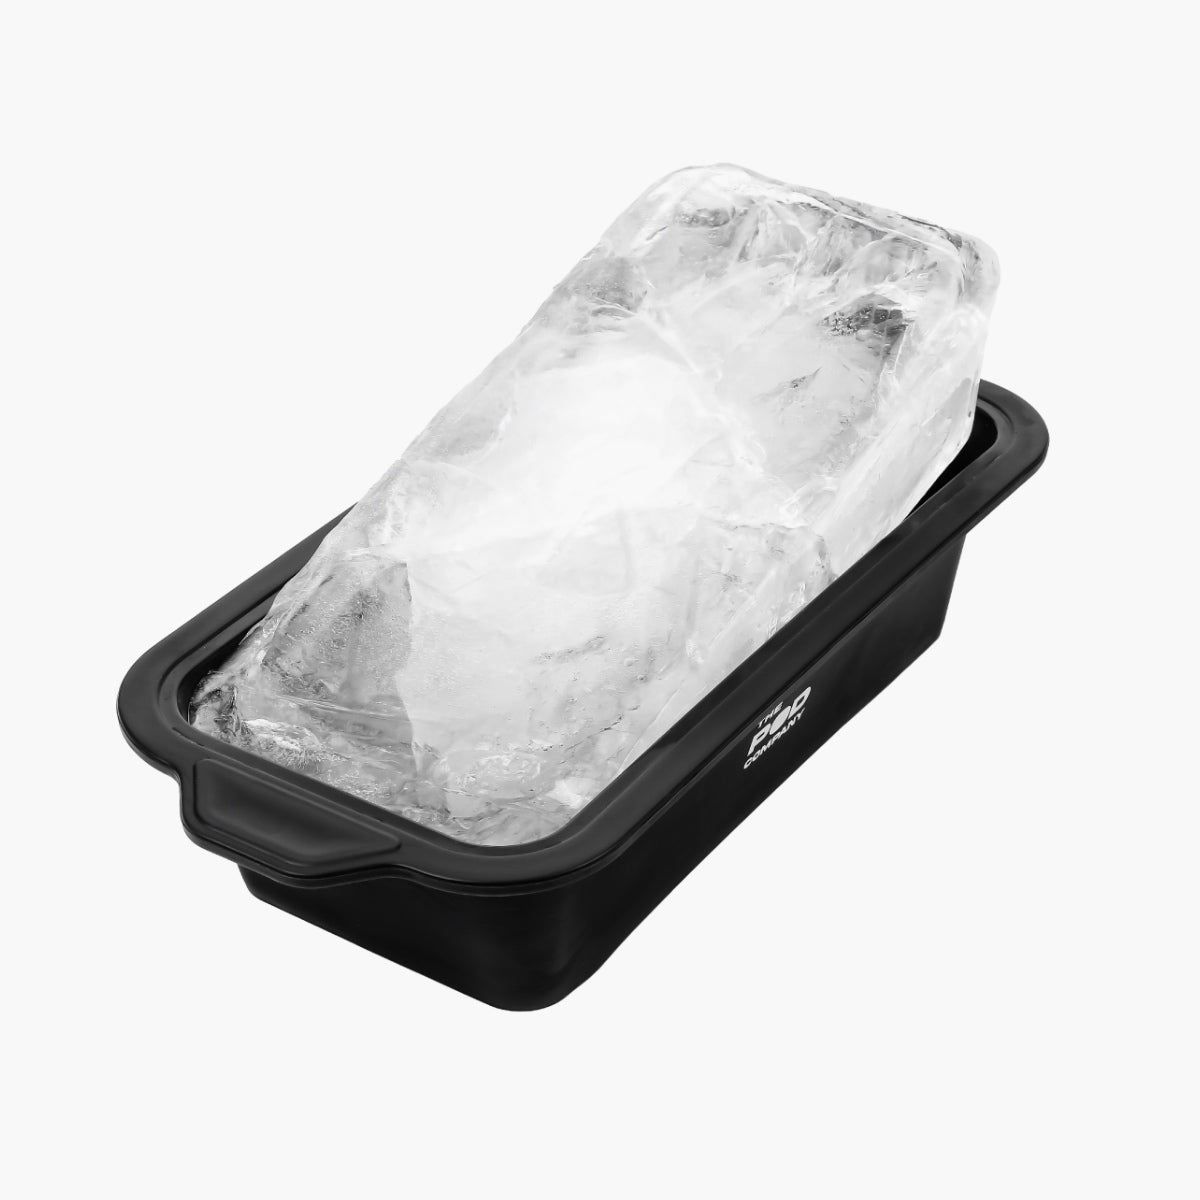 The Ice Pod - Portable Ice Bath – The Pod Company